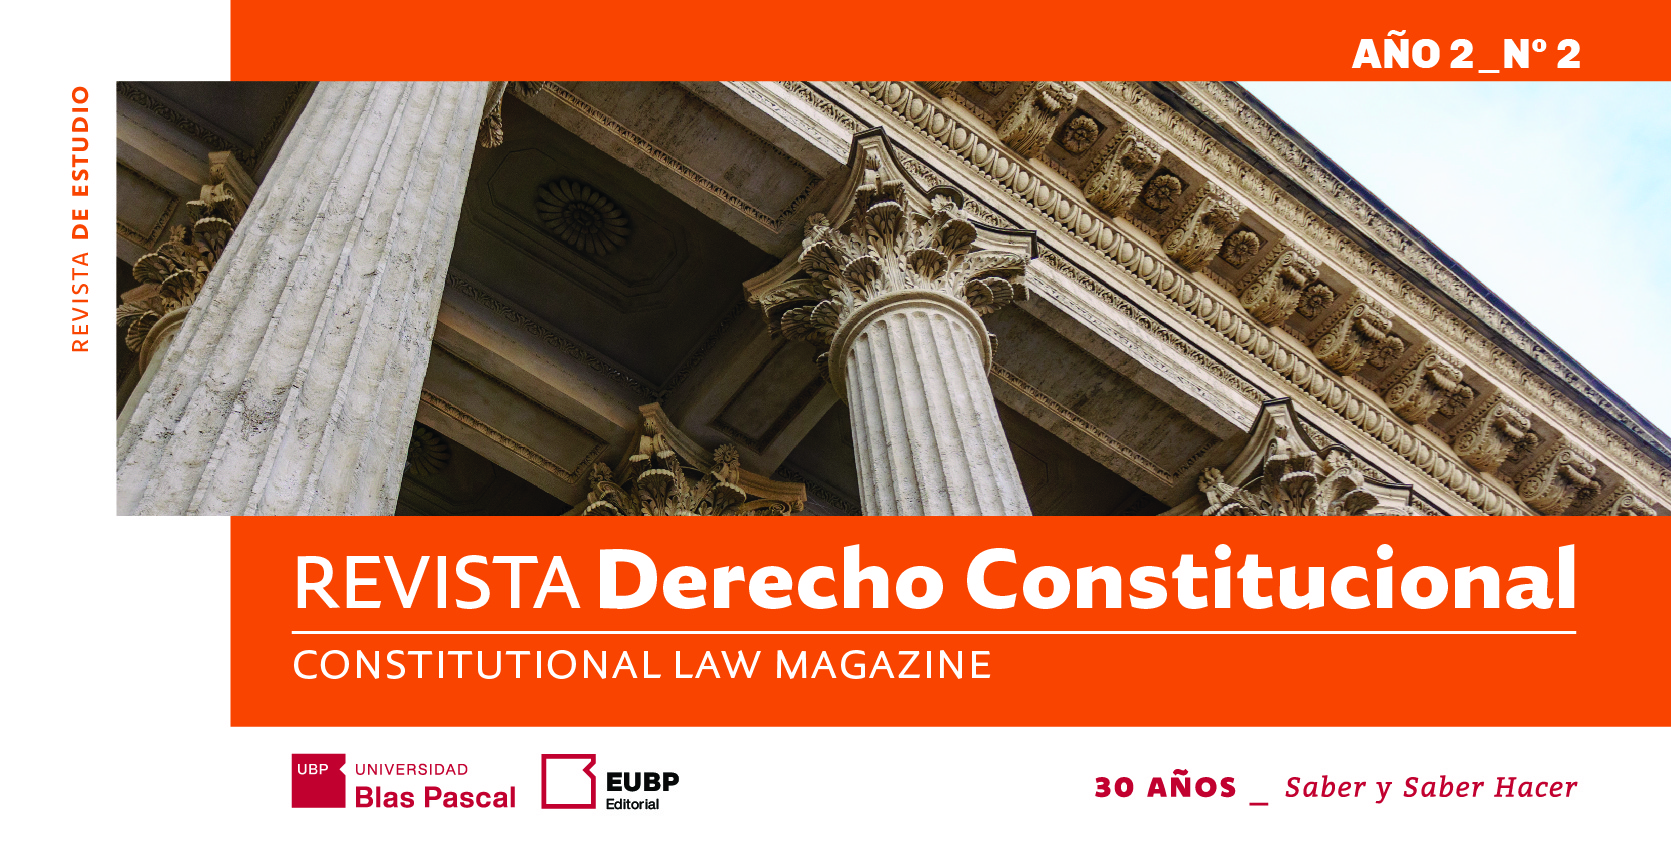 Call For Papers: Revista Derecho Constitucional